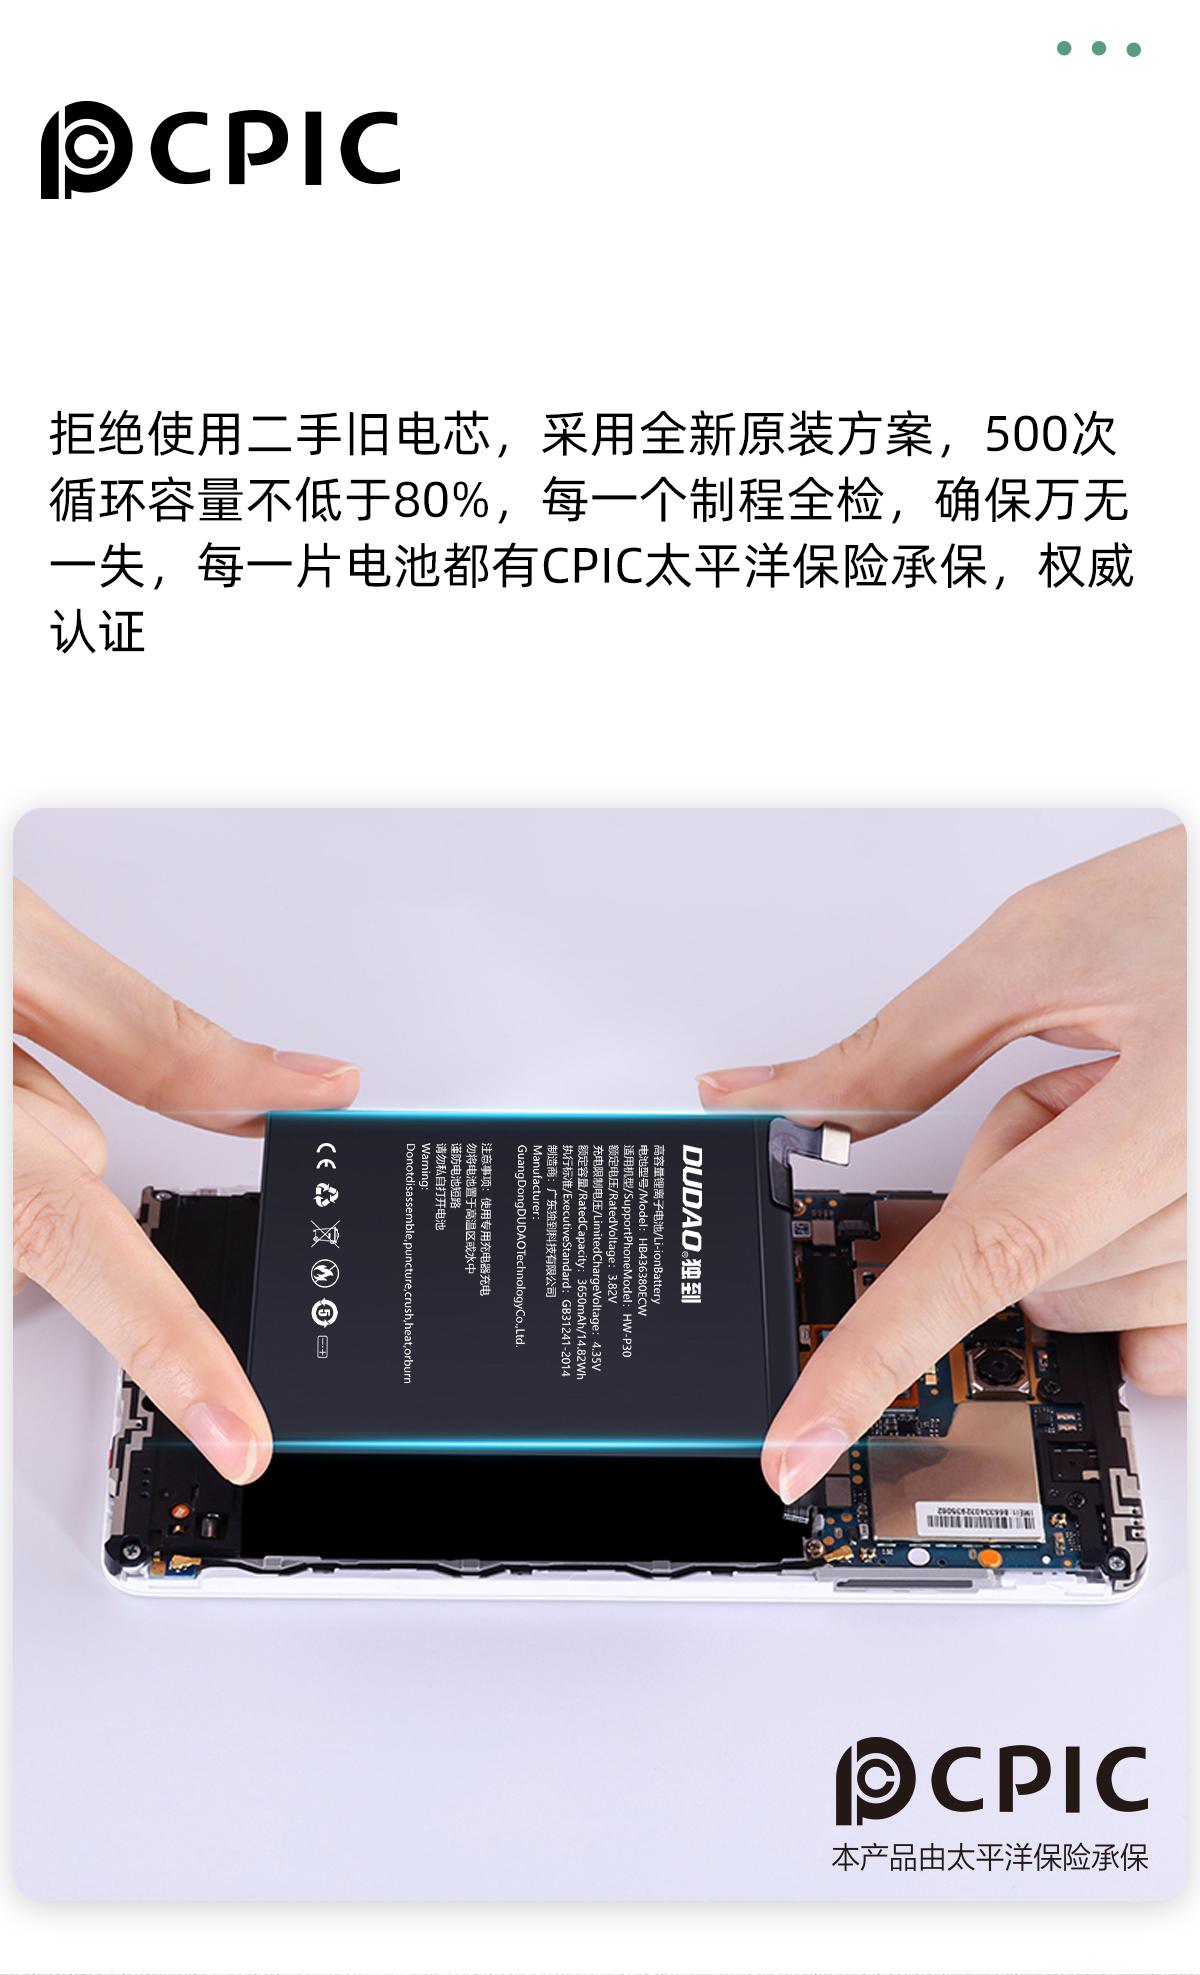 华为P9拆机视频 拆装电池 更换电池教程 【新正数码】_哔哩哔哩 (゜-゜)つロ 干杯~-bilibili